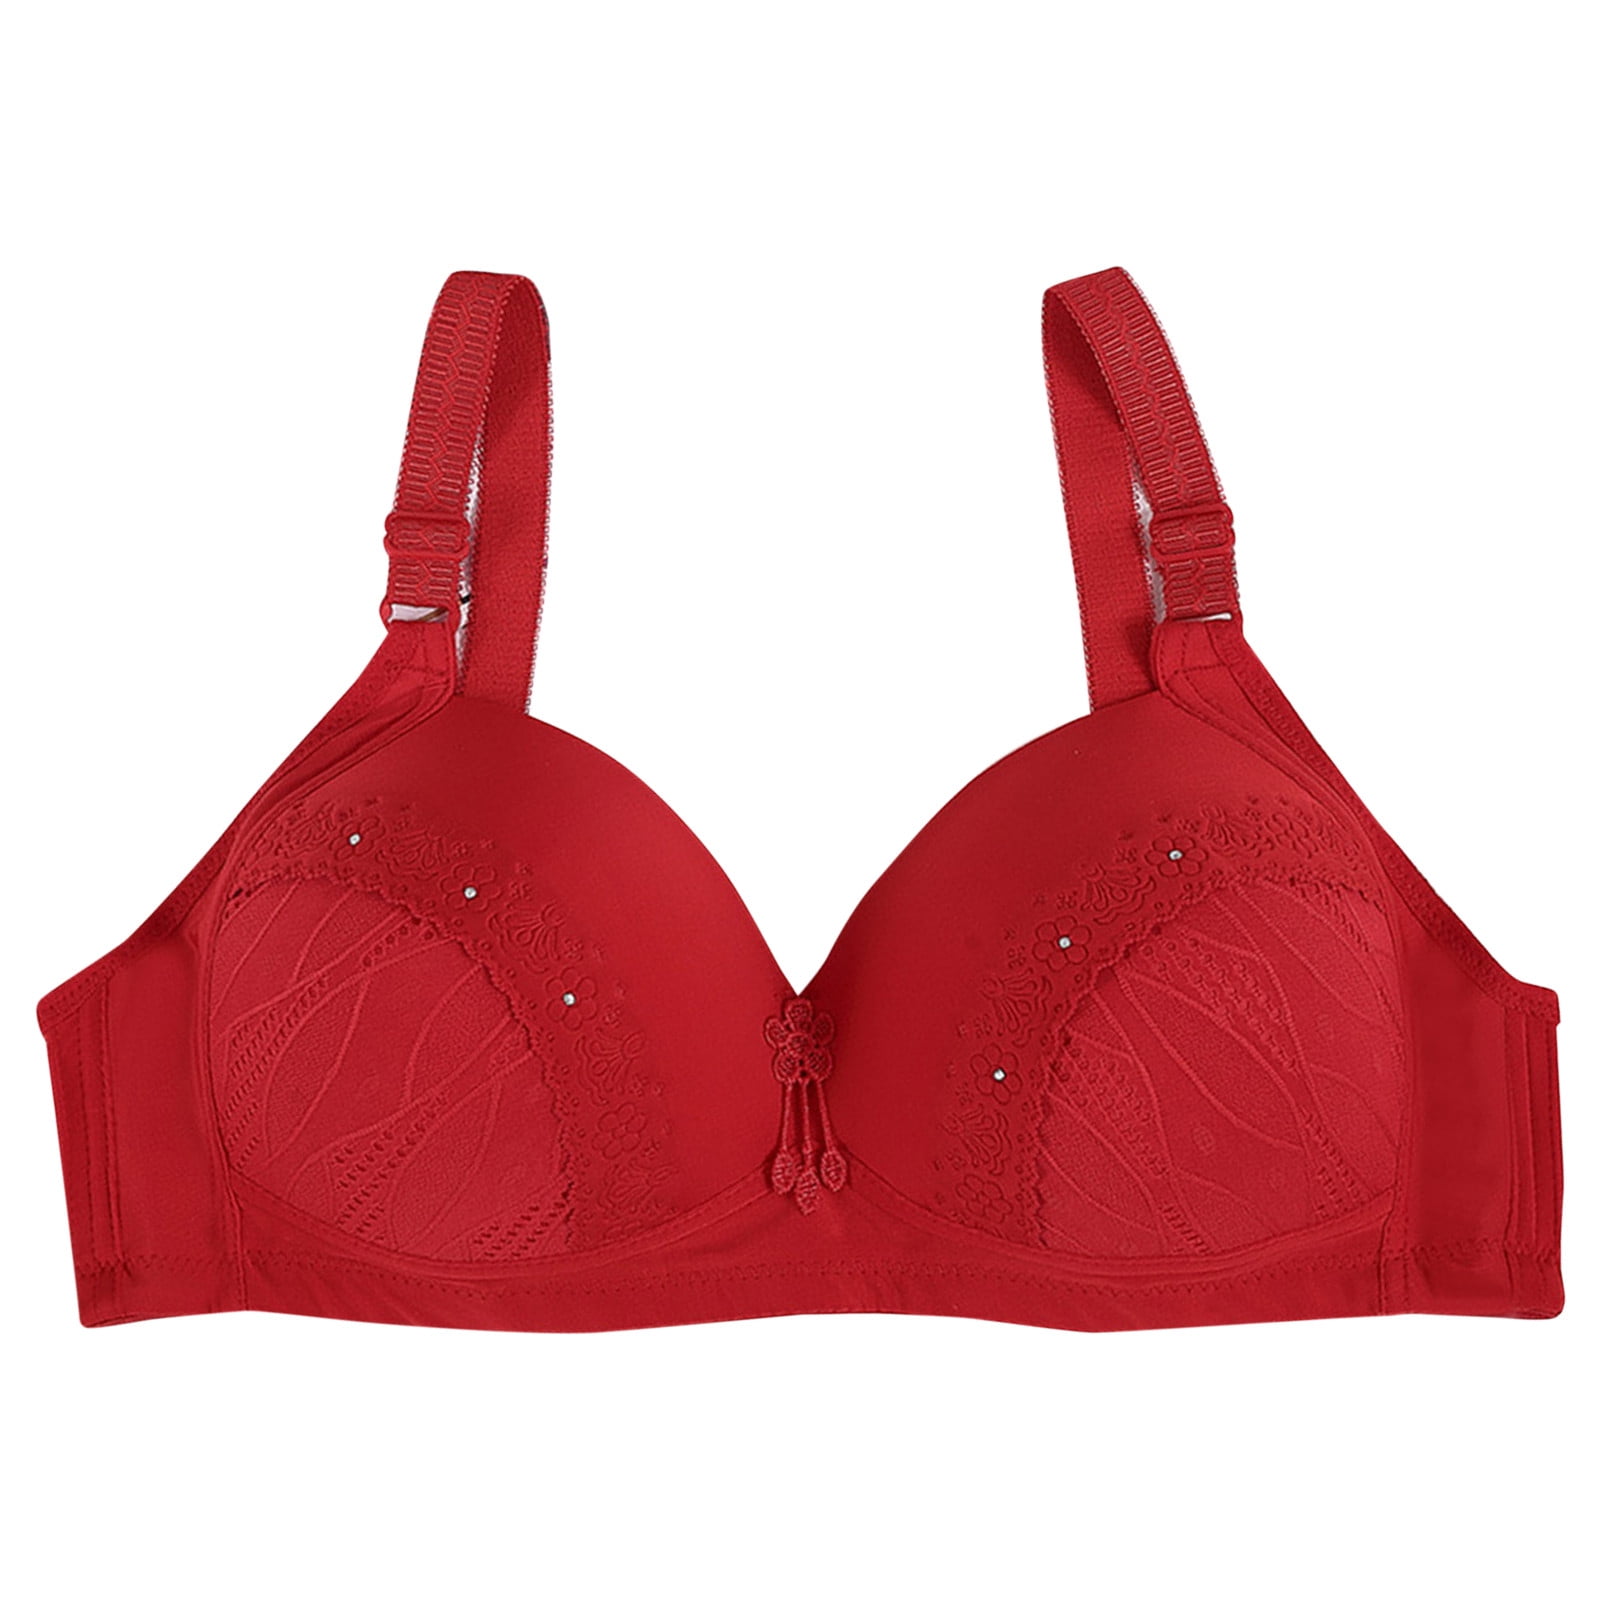 ▷ Women's underwear bras online - Promise (28)